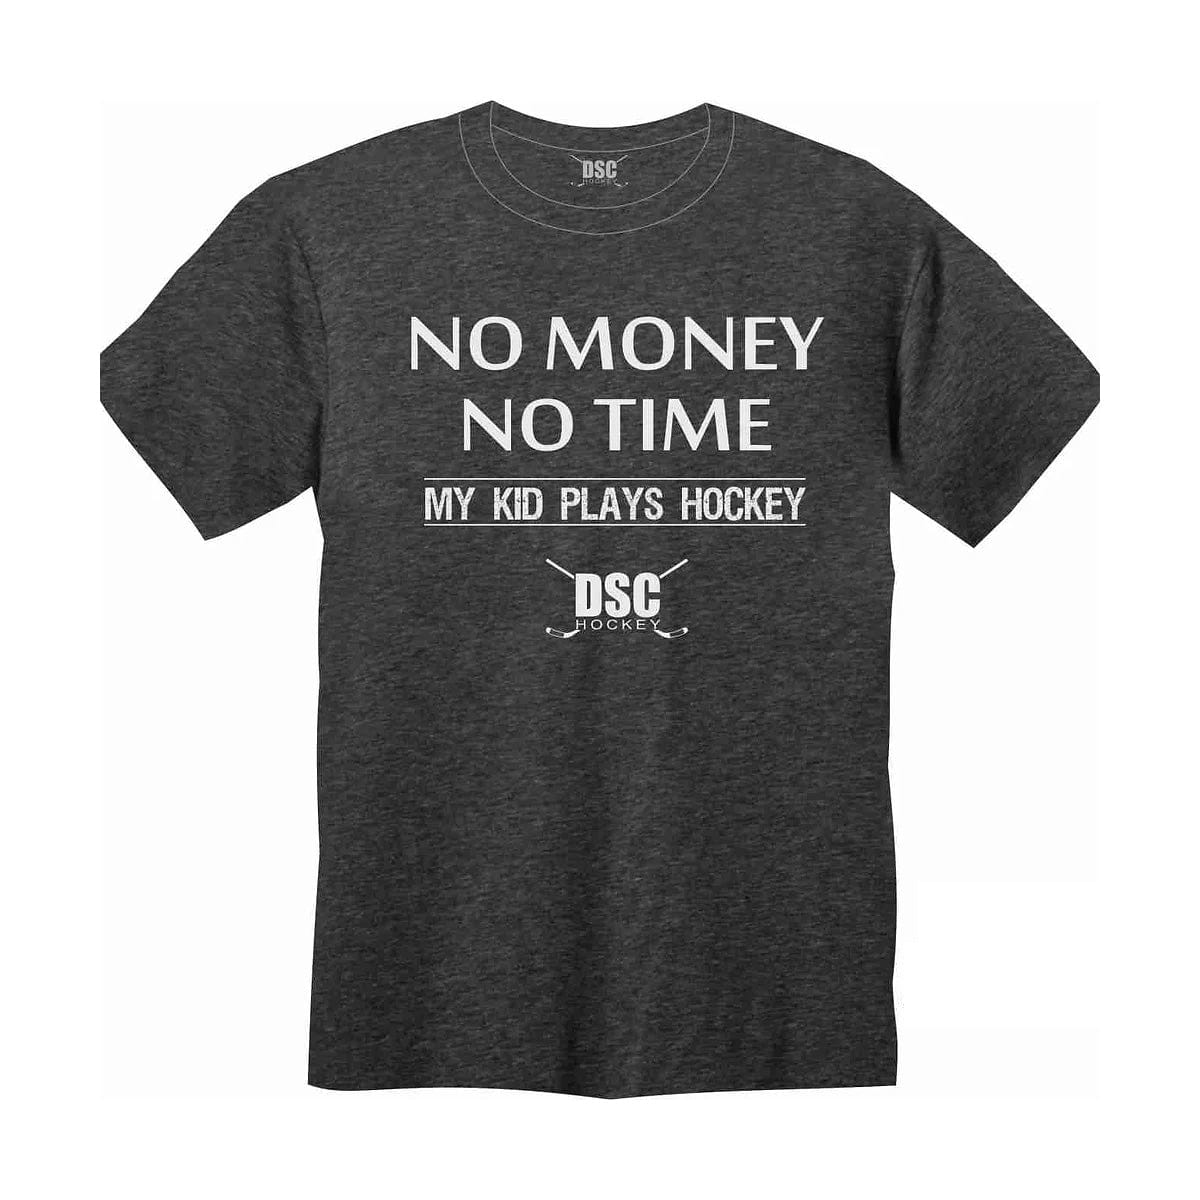 DSC Hockey No Money Mens Shirt - The Hockey Shop Source For Sports